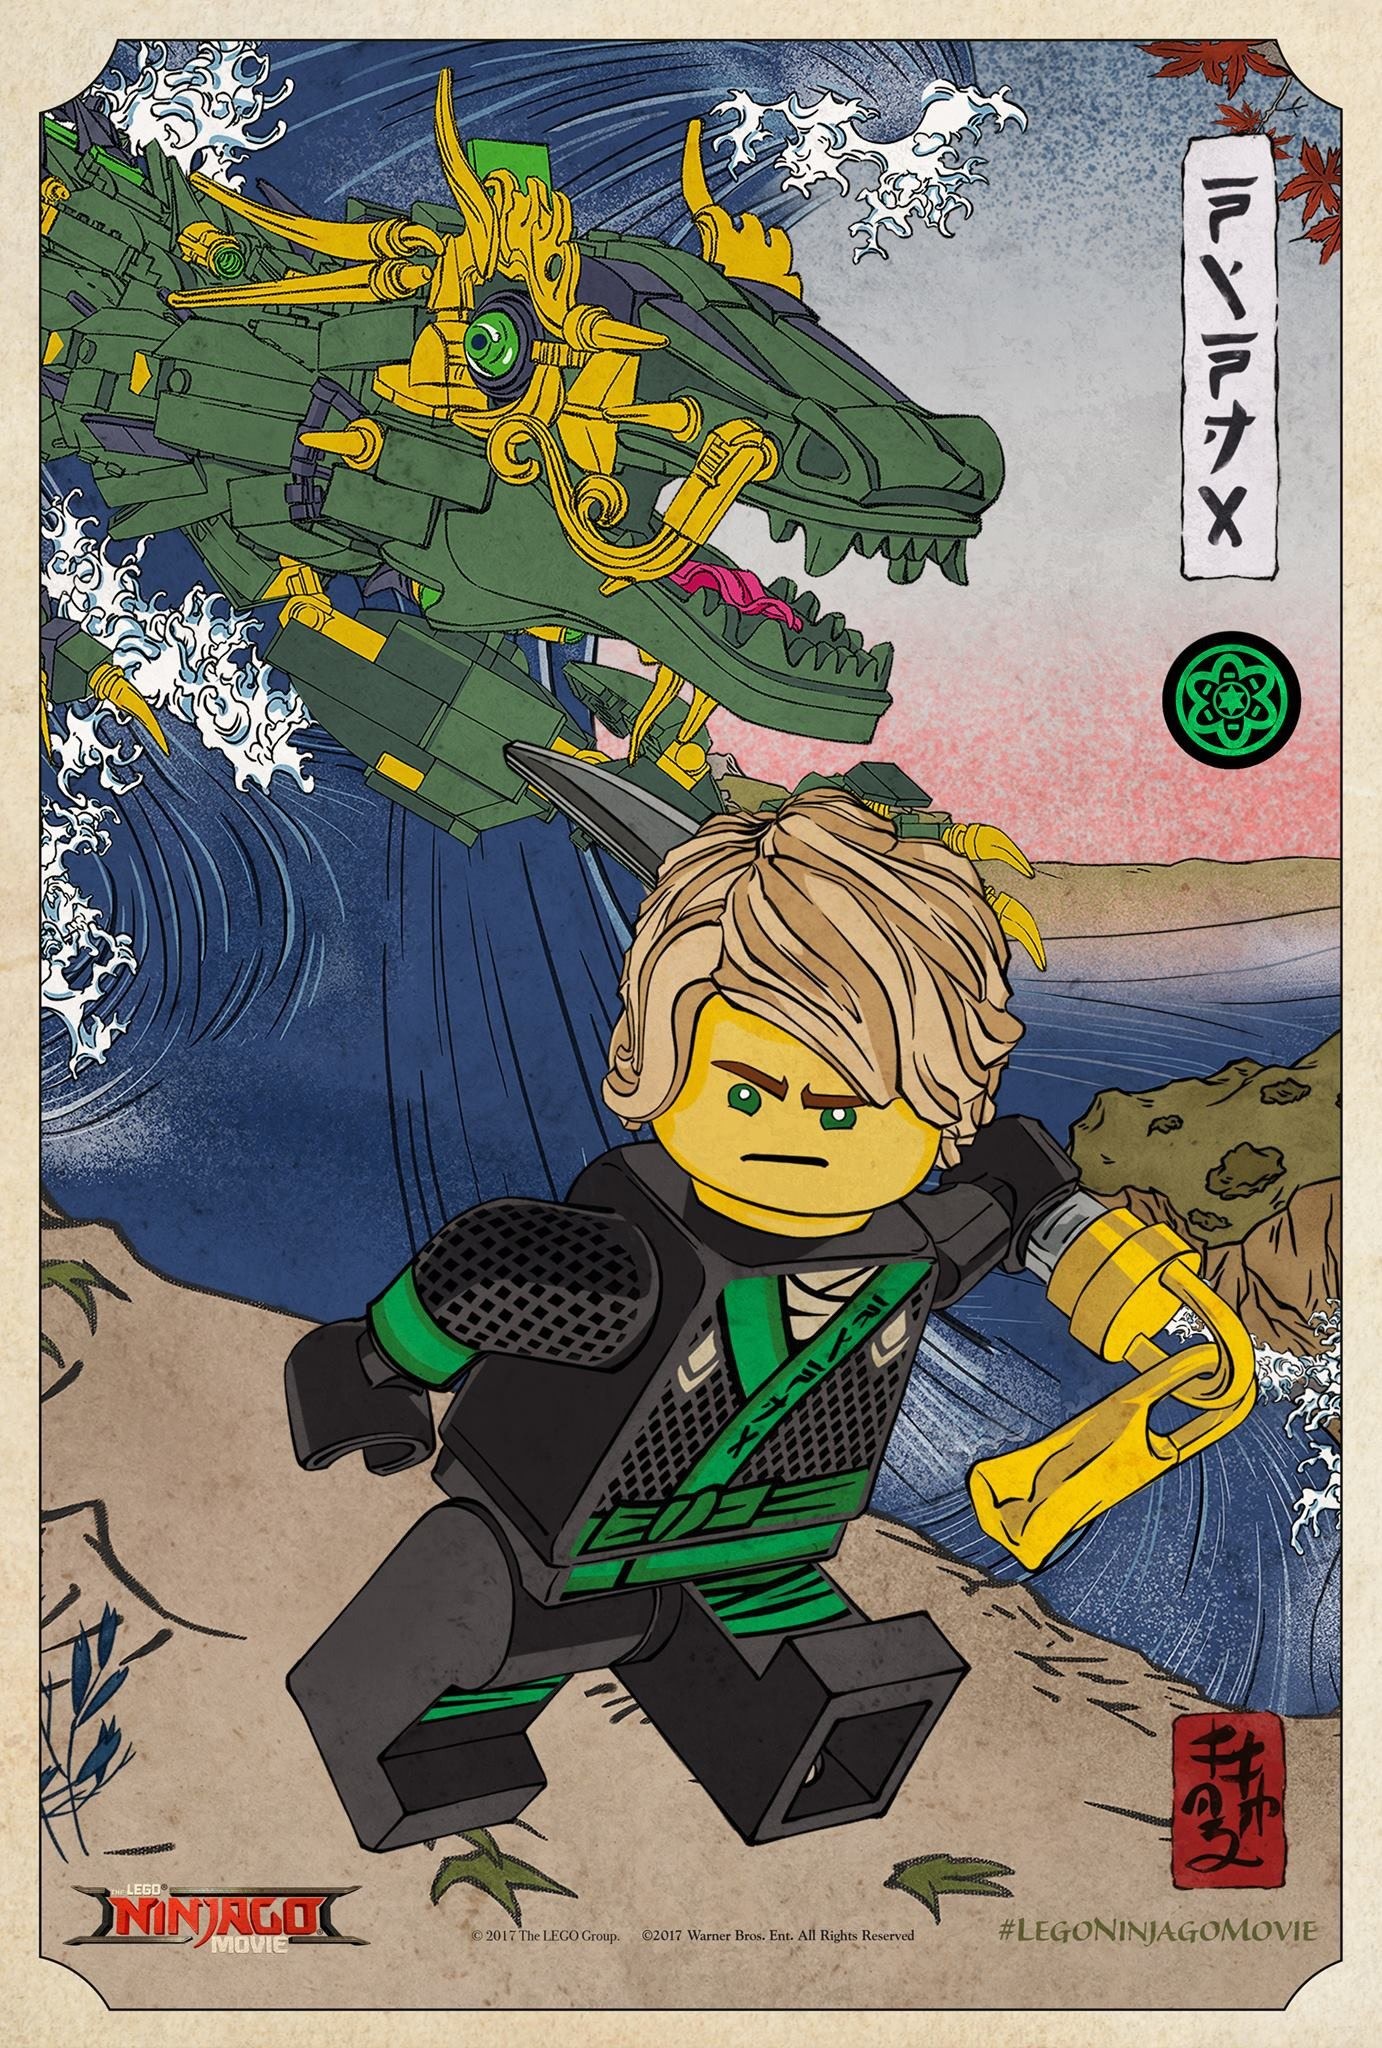 The Lego Ninjago Movie (2017) HD Wallpaper From Gallsource.com